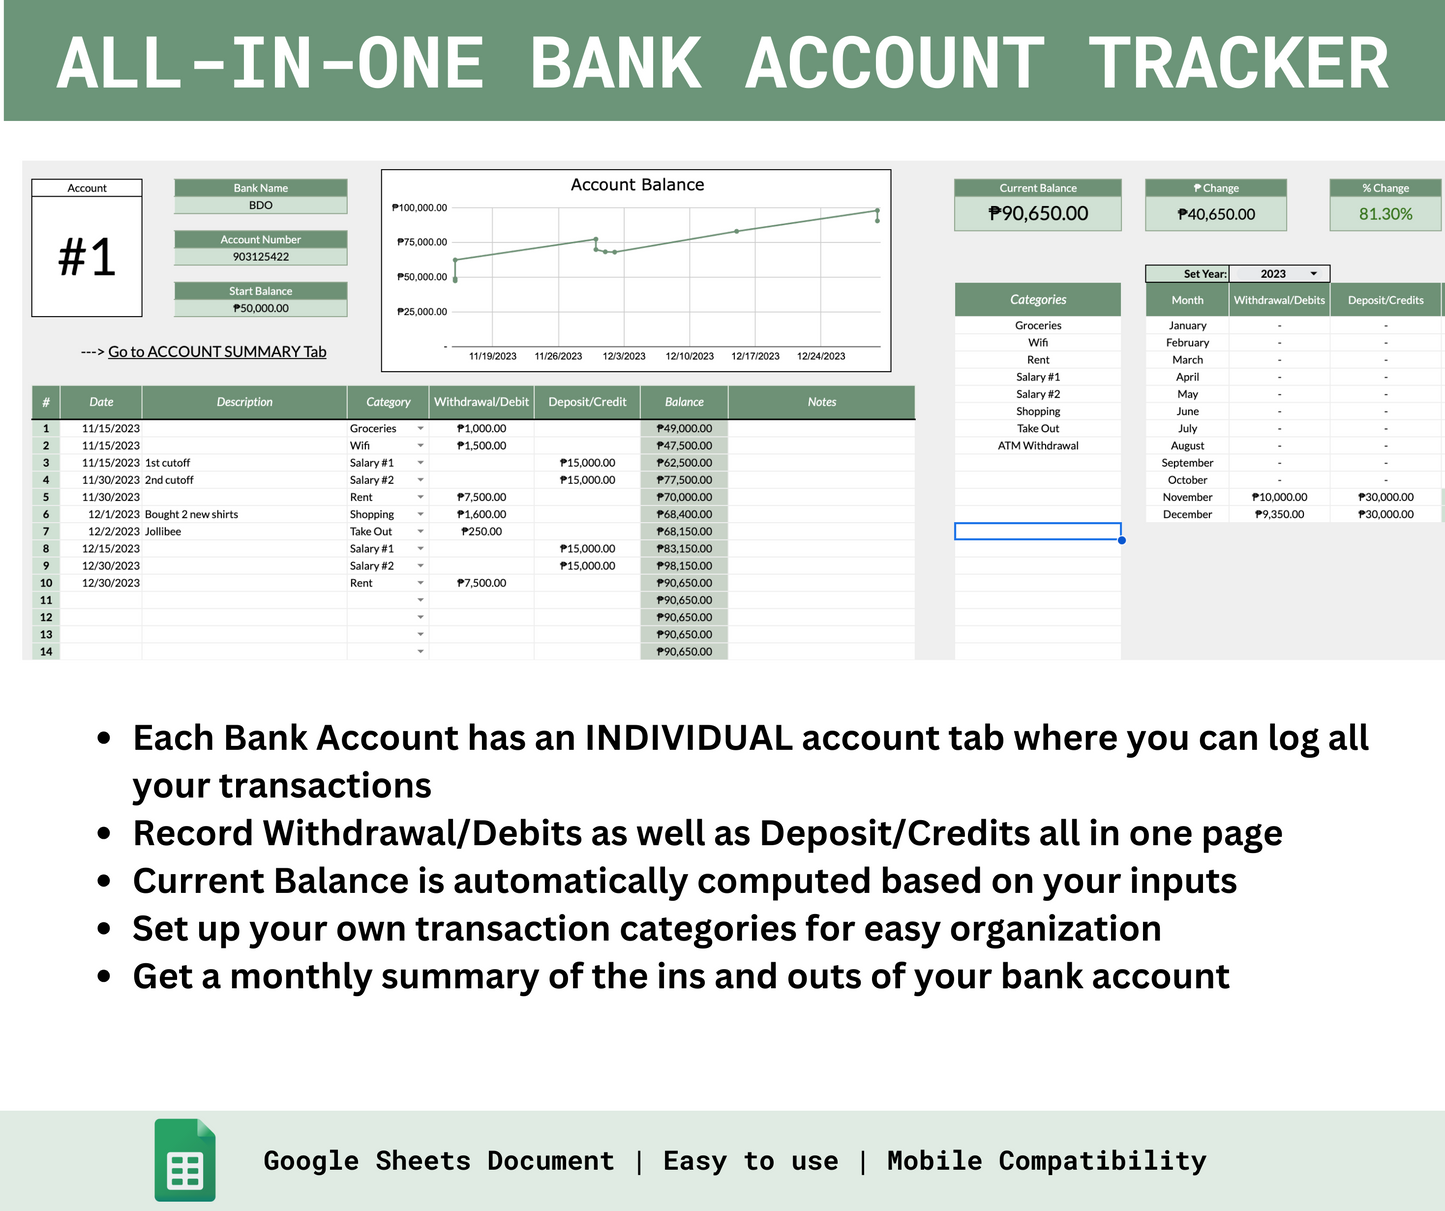 Bank Account Tracker